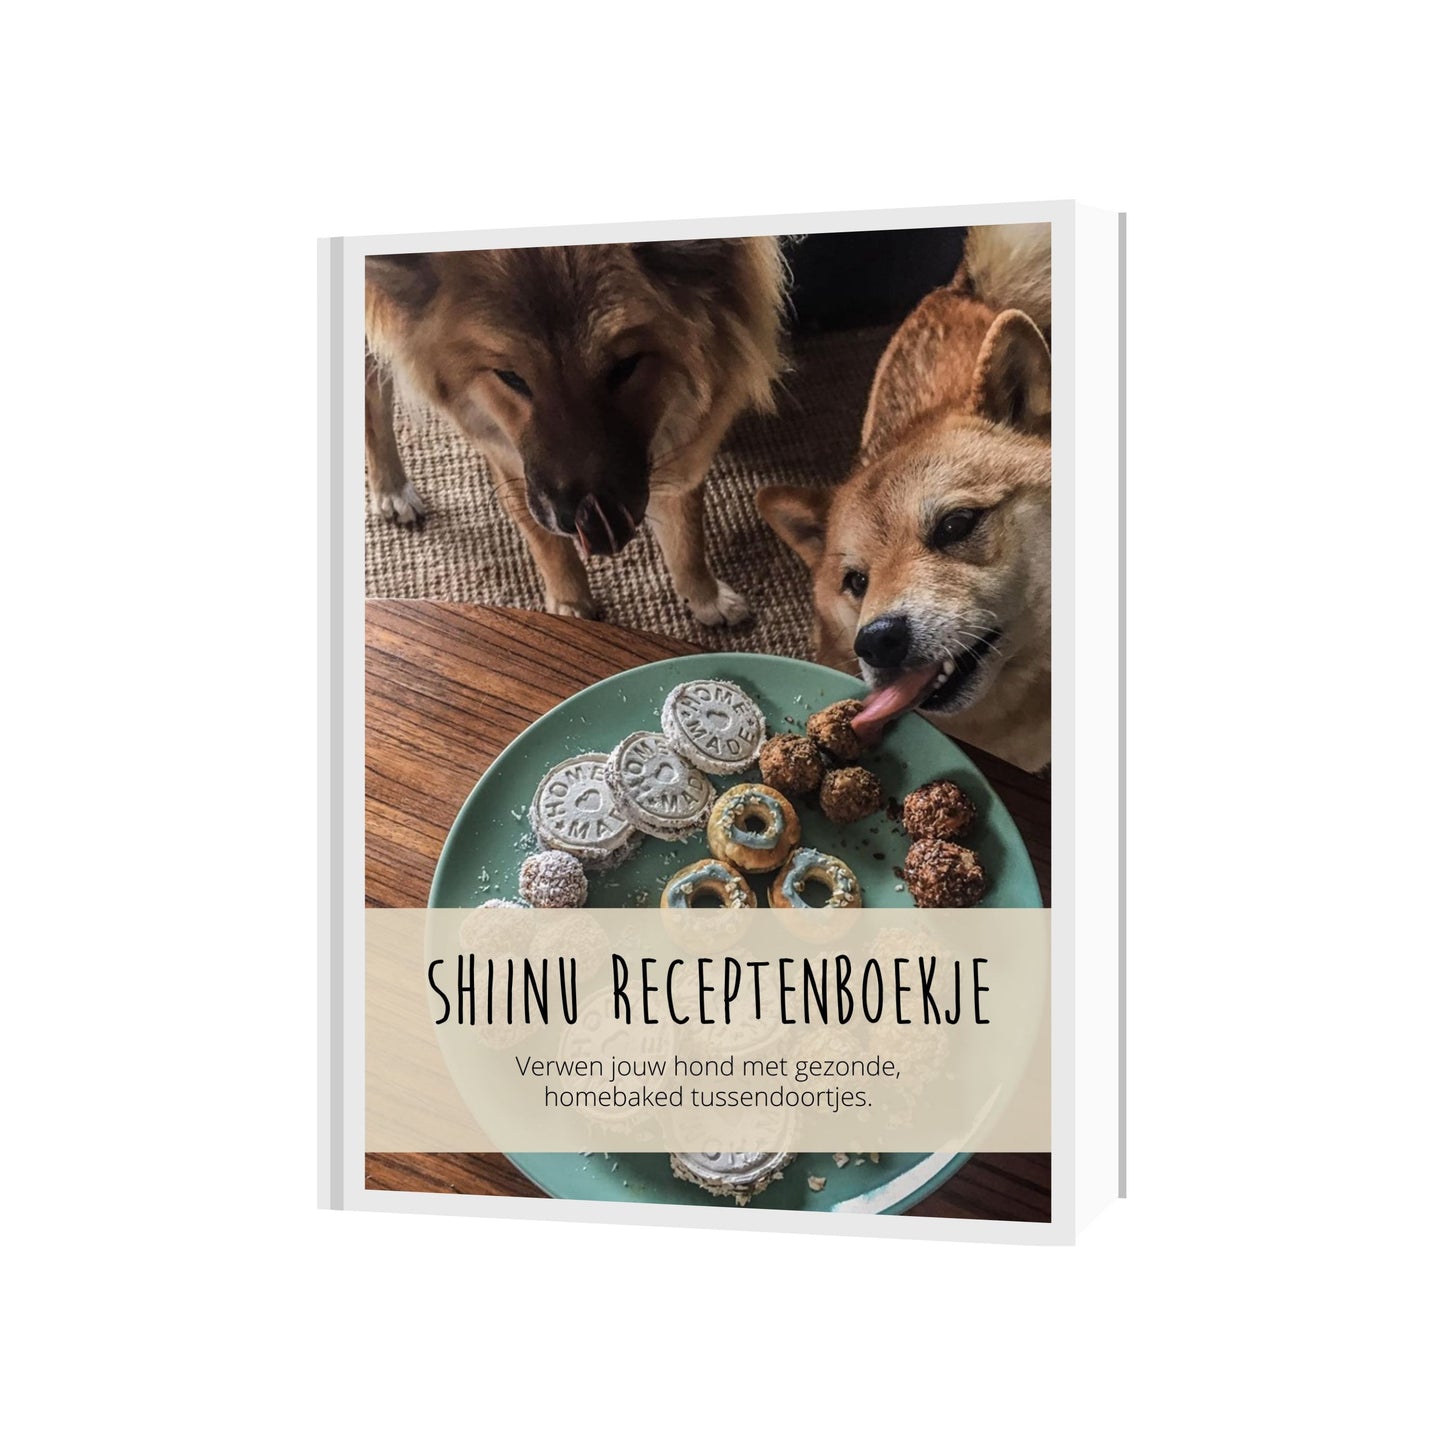 Hondenkoekjes receptenboekje (PDF)